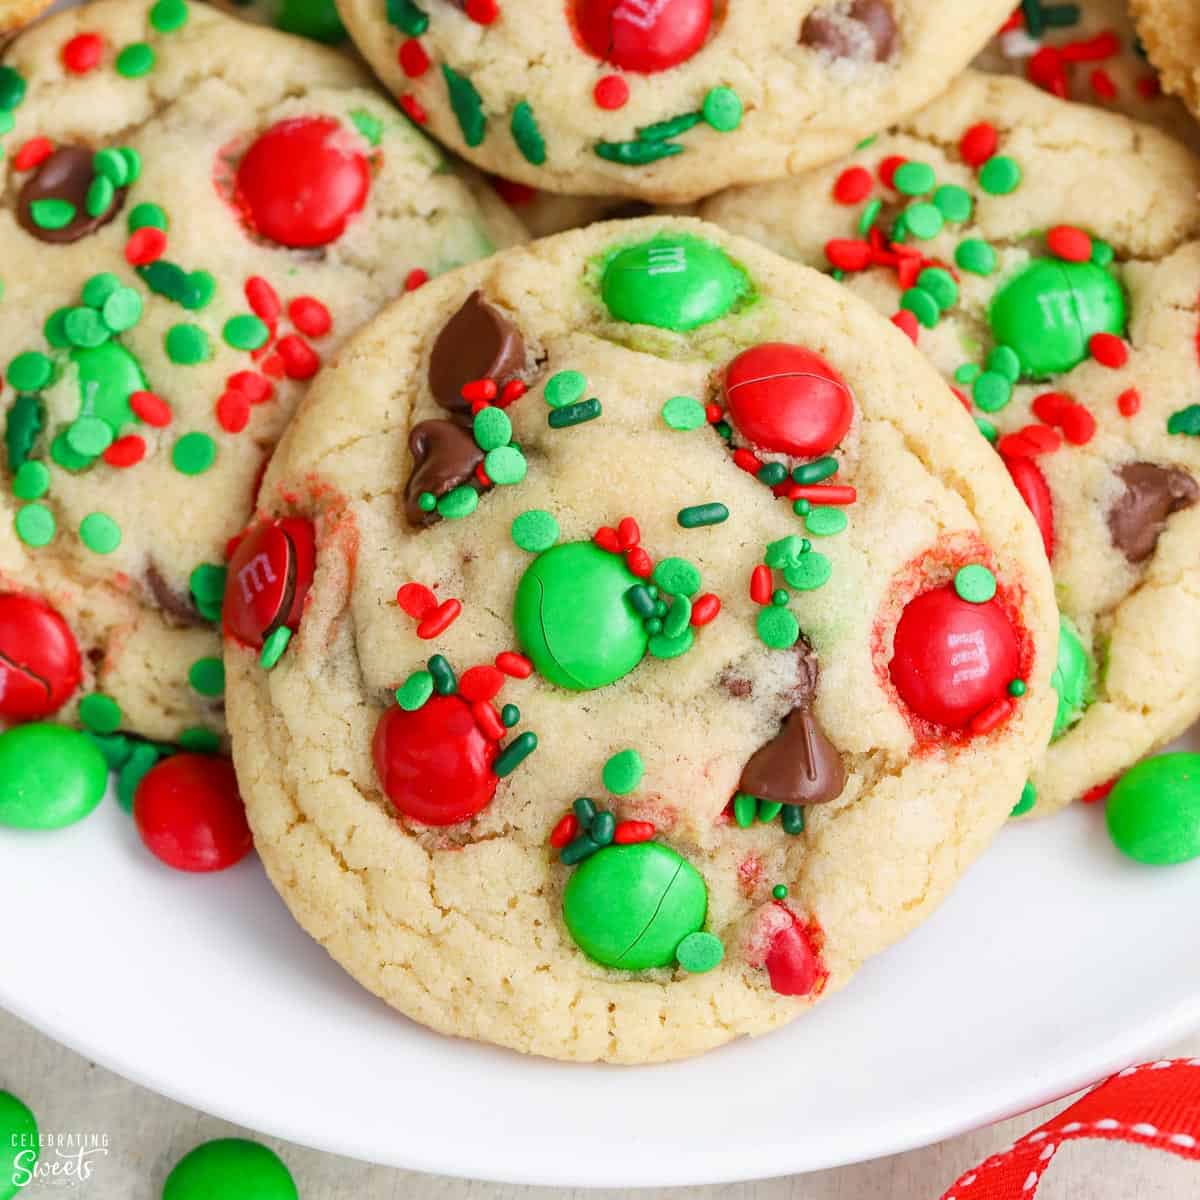 https://celebratingsweets.com/wp-content/uploads/2020/11/Christmas-Cookies-1-3.jpg